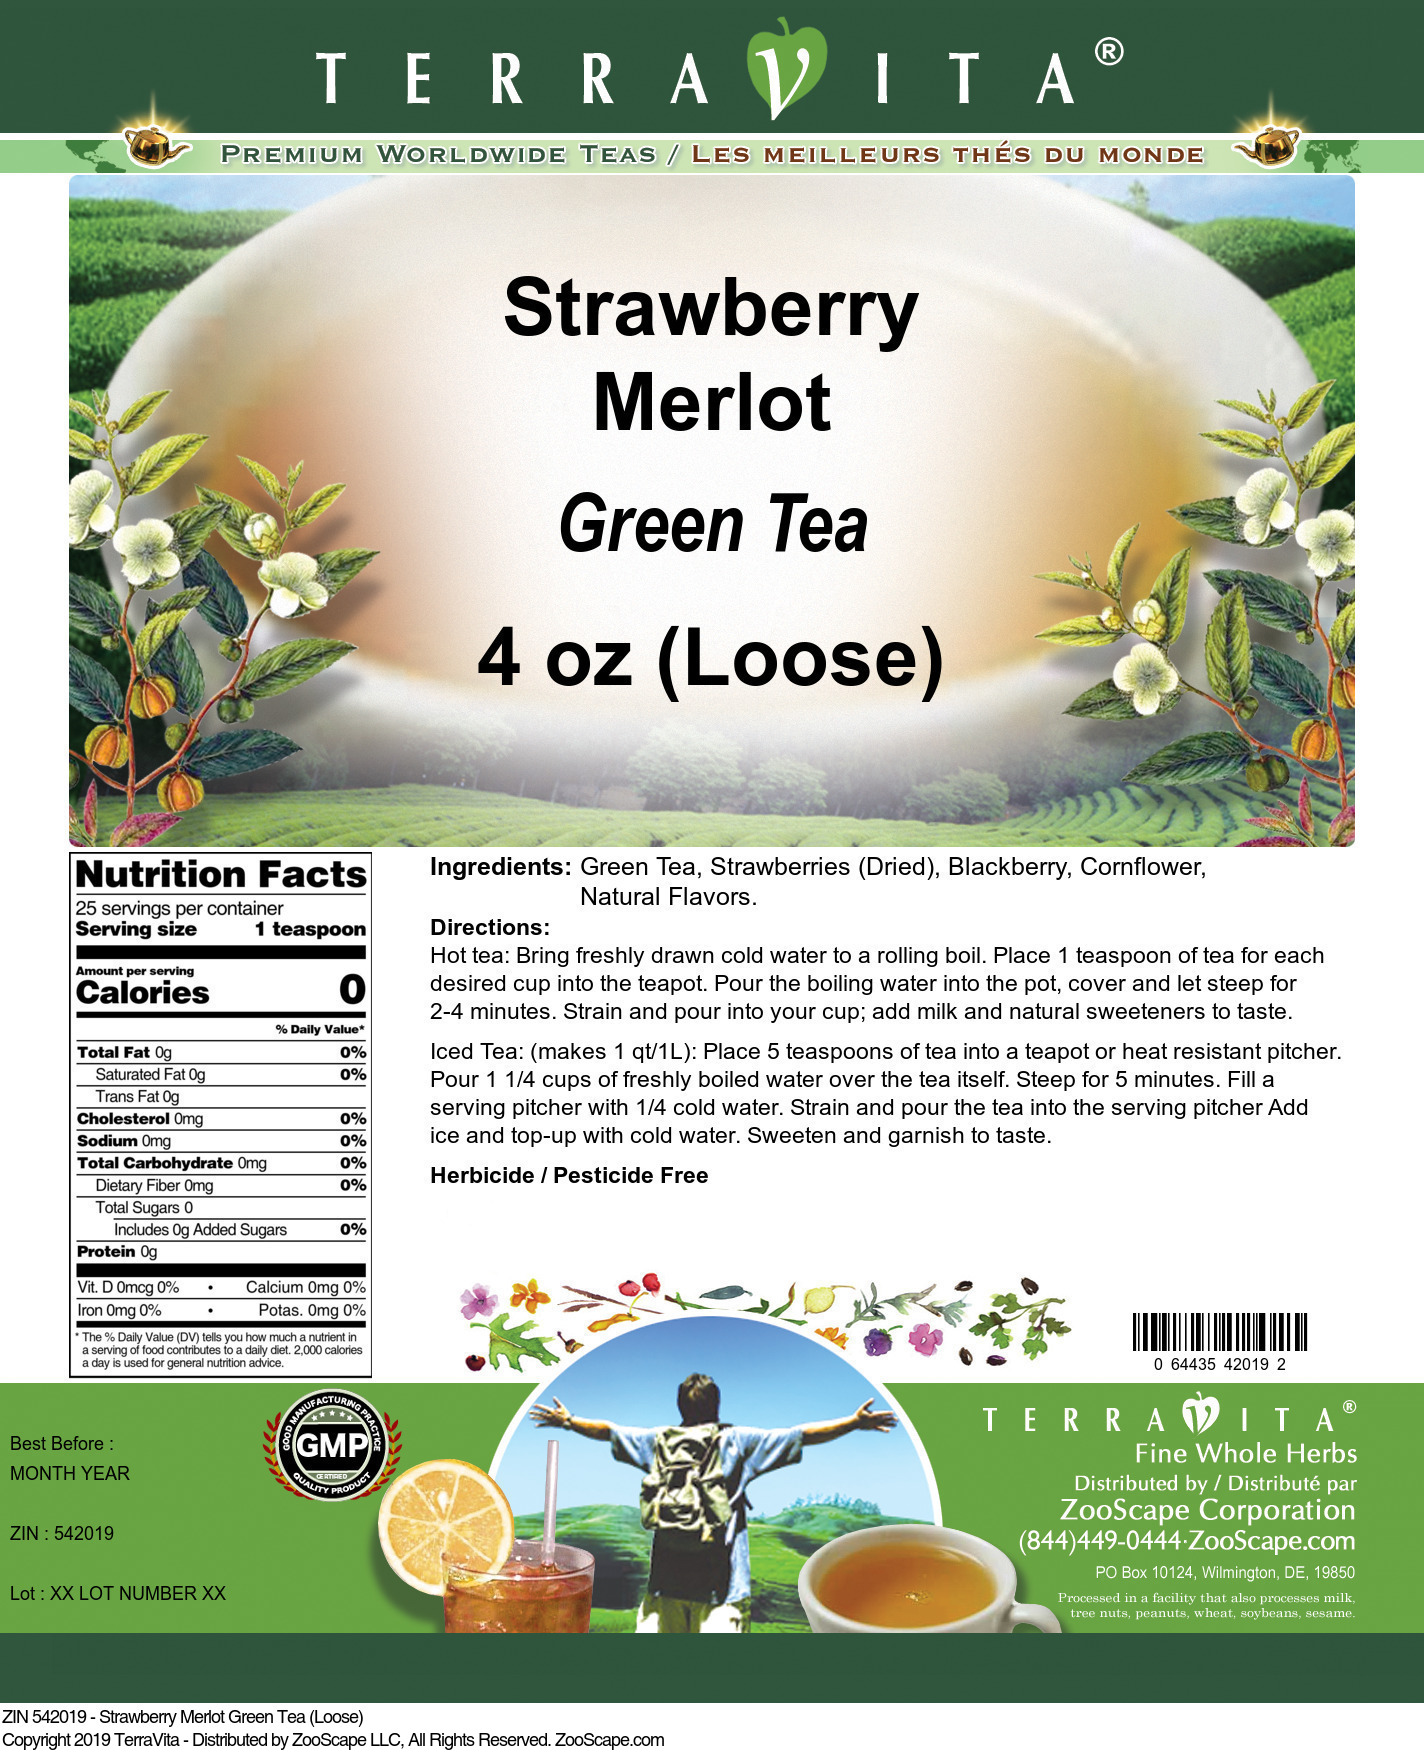 Strawberry Merlot Green Tea (Loose) - Label